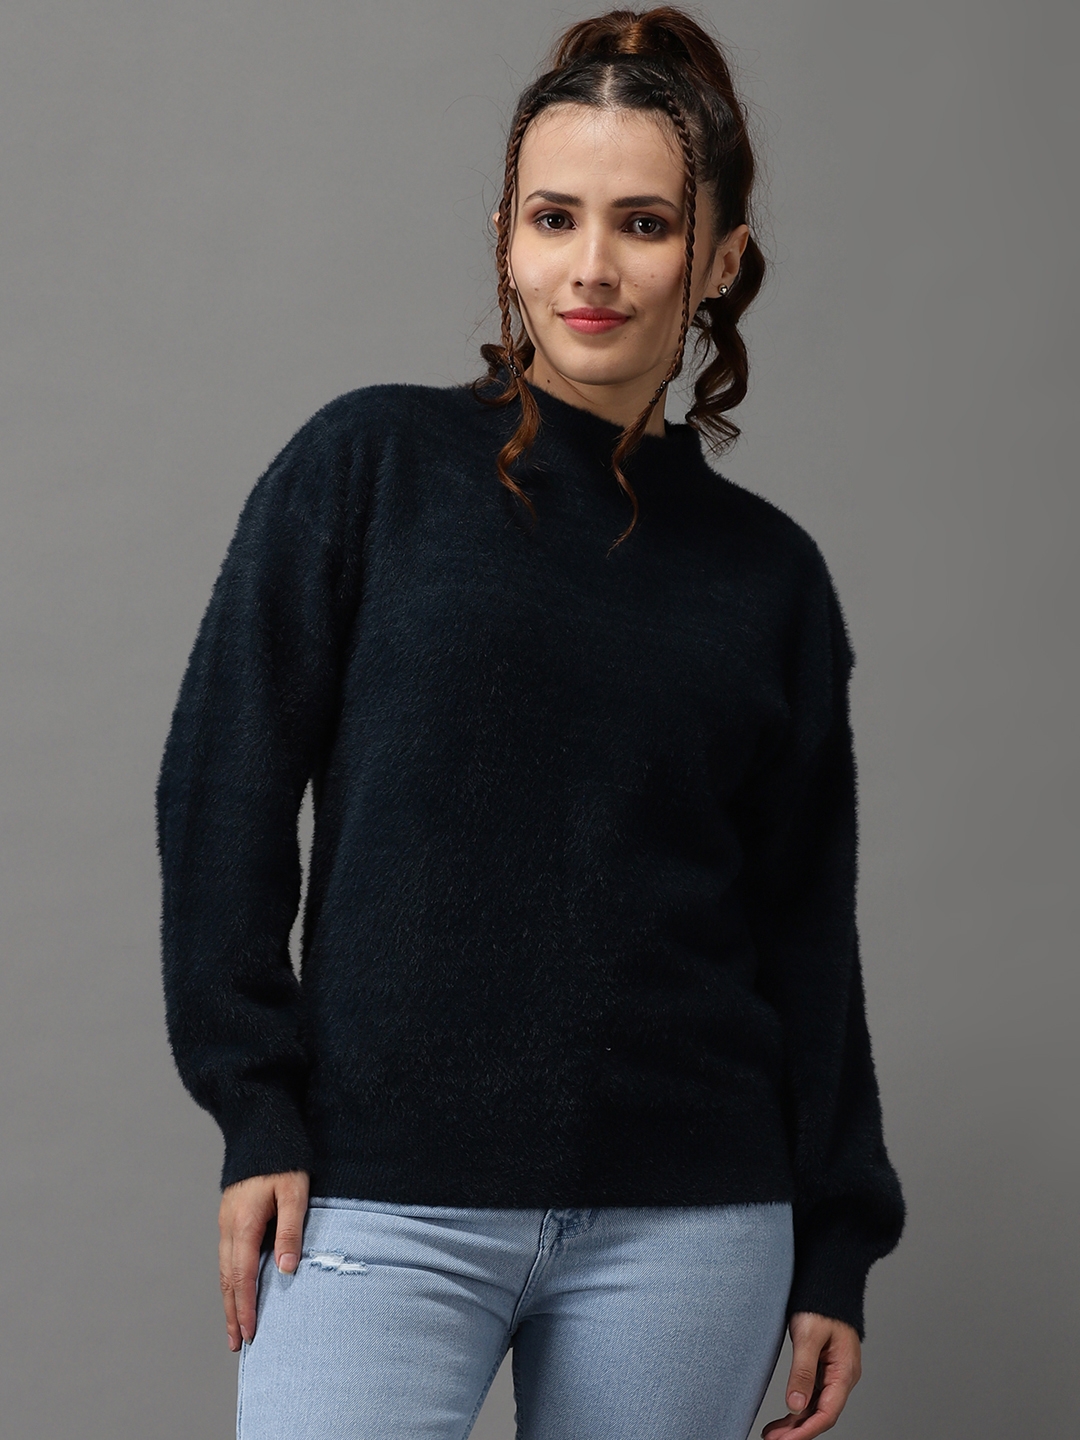 Women's Blue Acrylic Solid Sweaters